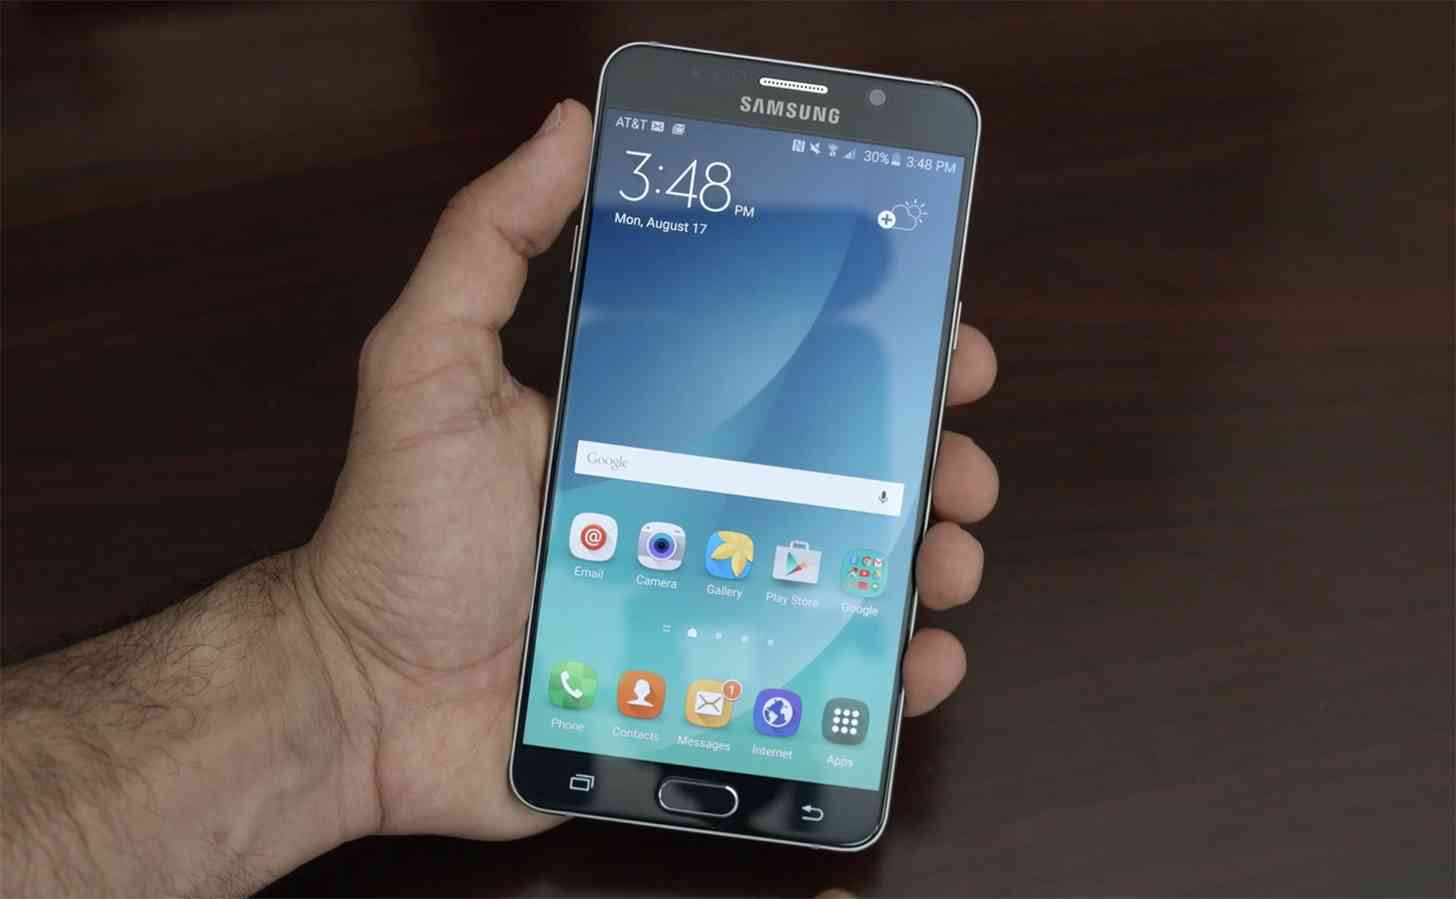 Samsung Galaxy Note 5 hands-on